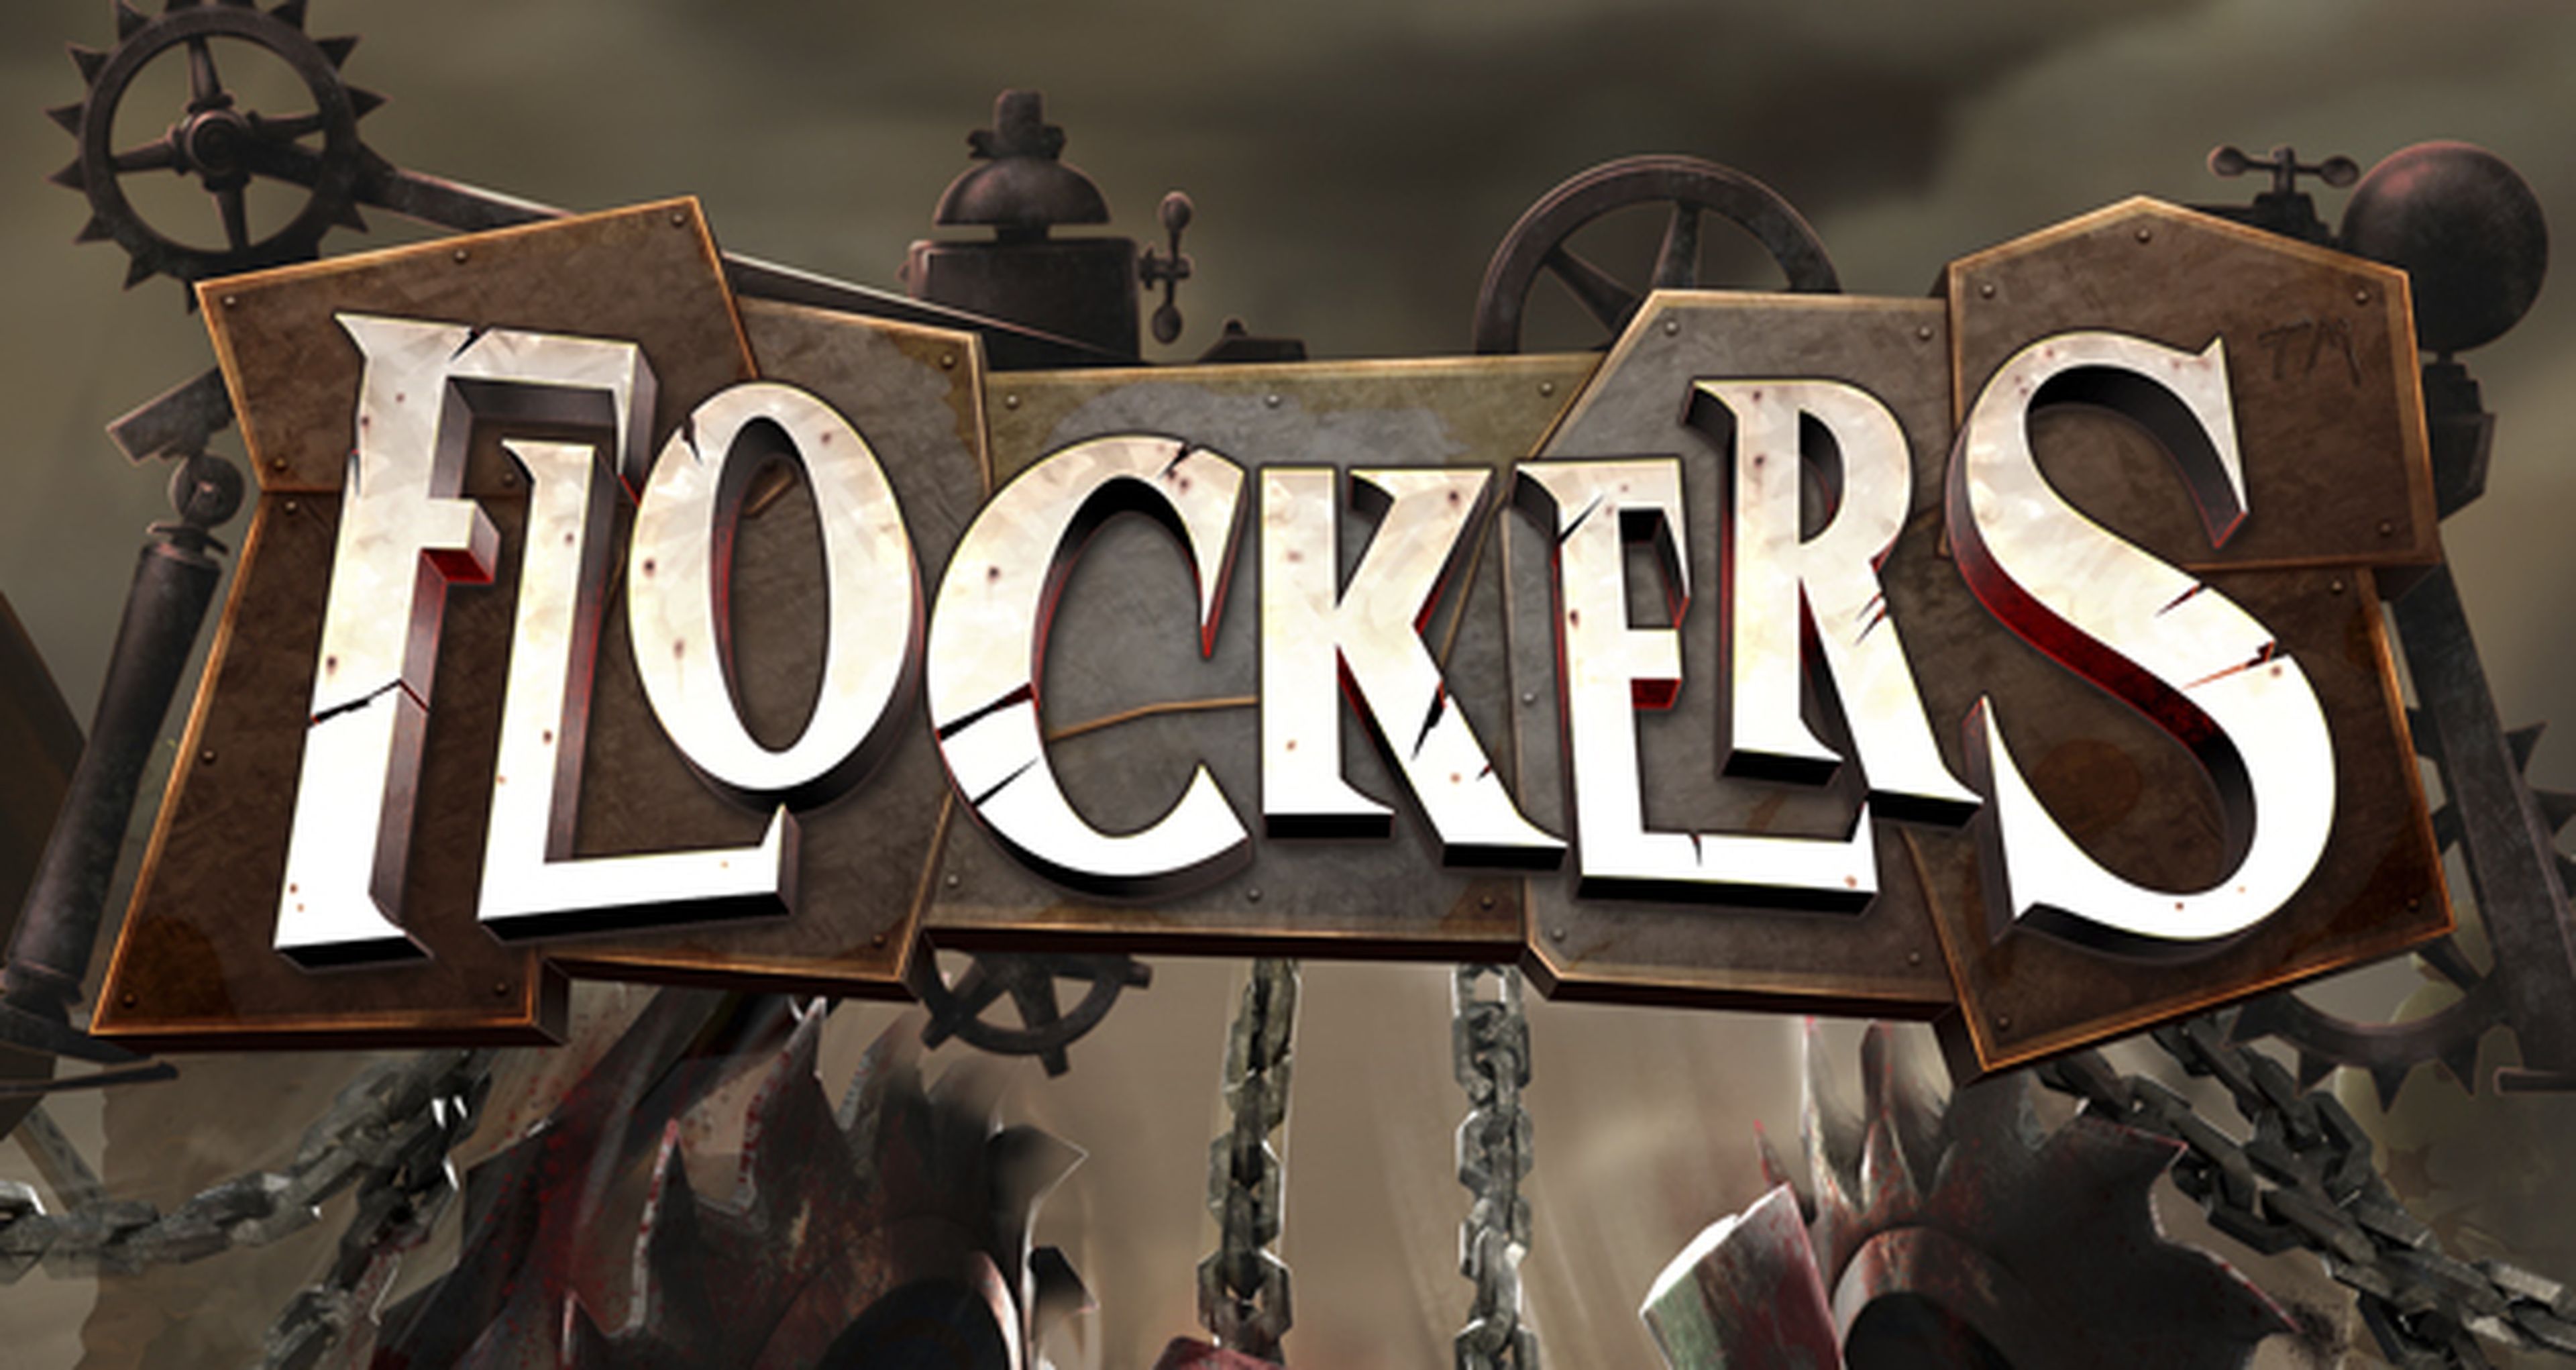 Flockers llegará a Steam en mayo